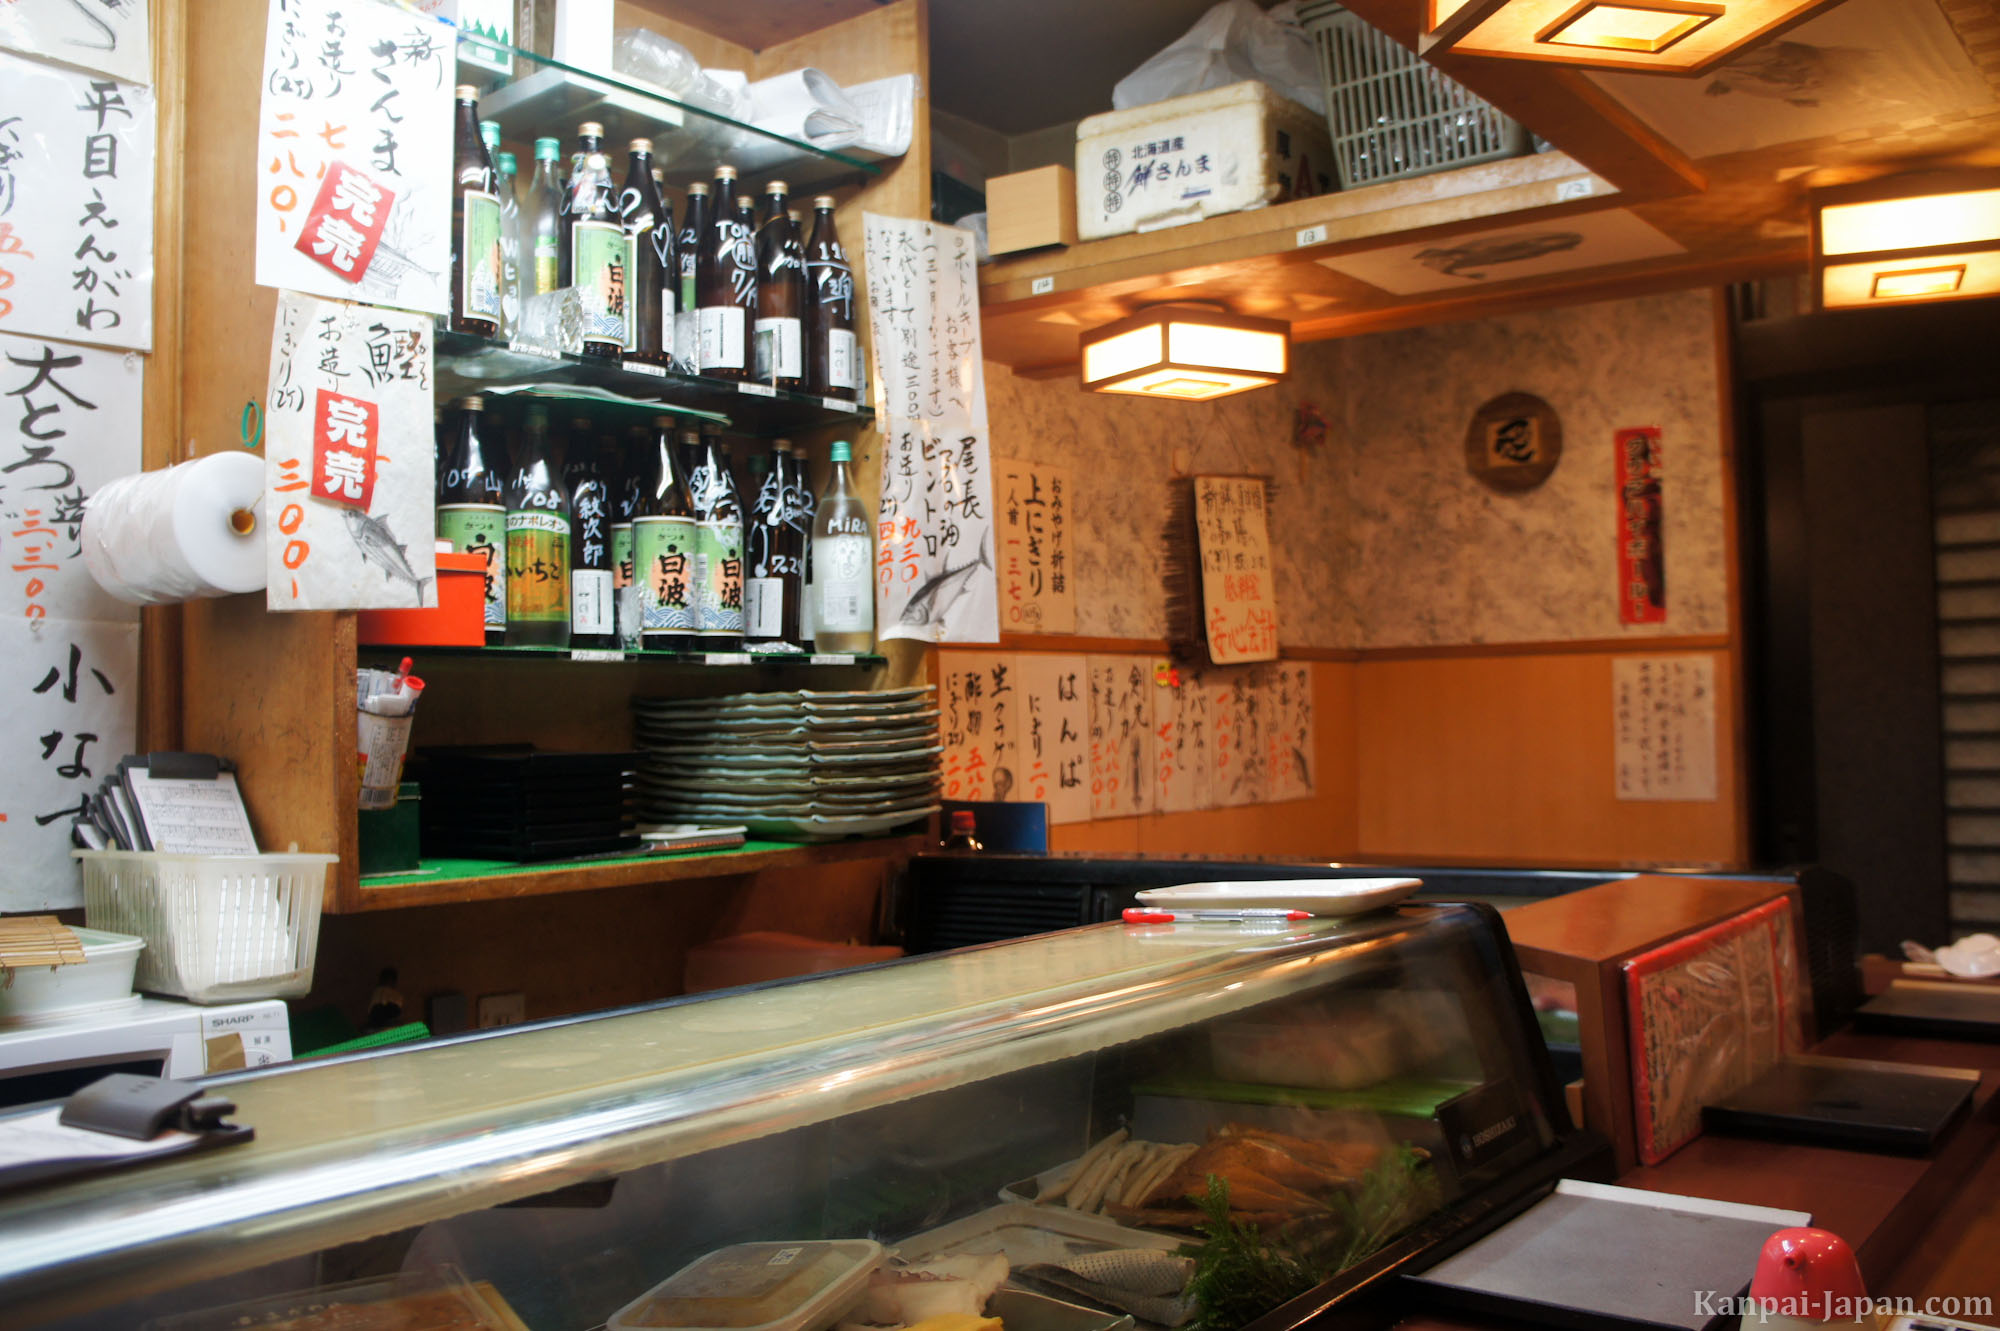 Ichiba Zushi - One of the best sushi restaurants in Japan